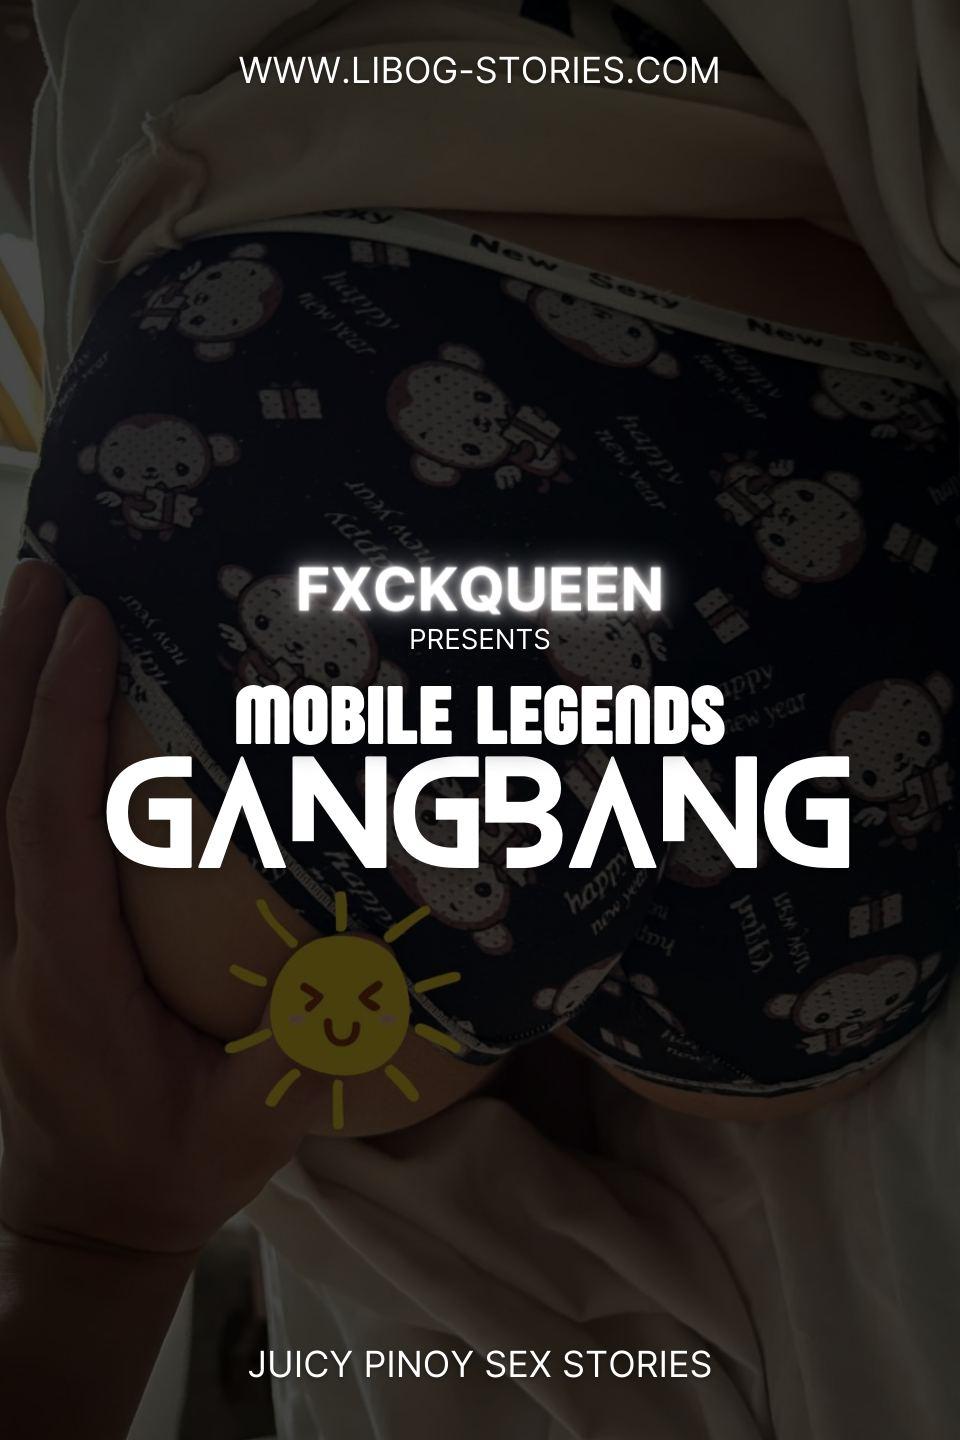 Mobile Legends: Gangbang